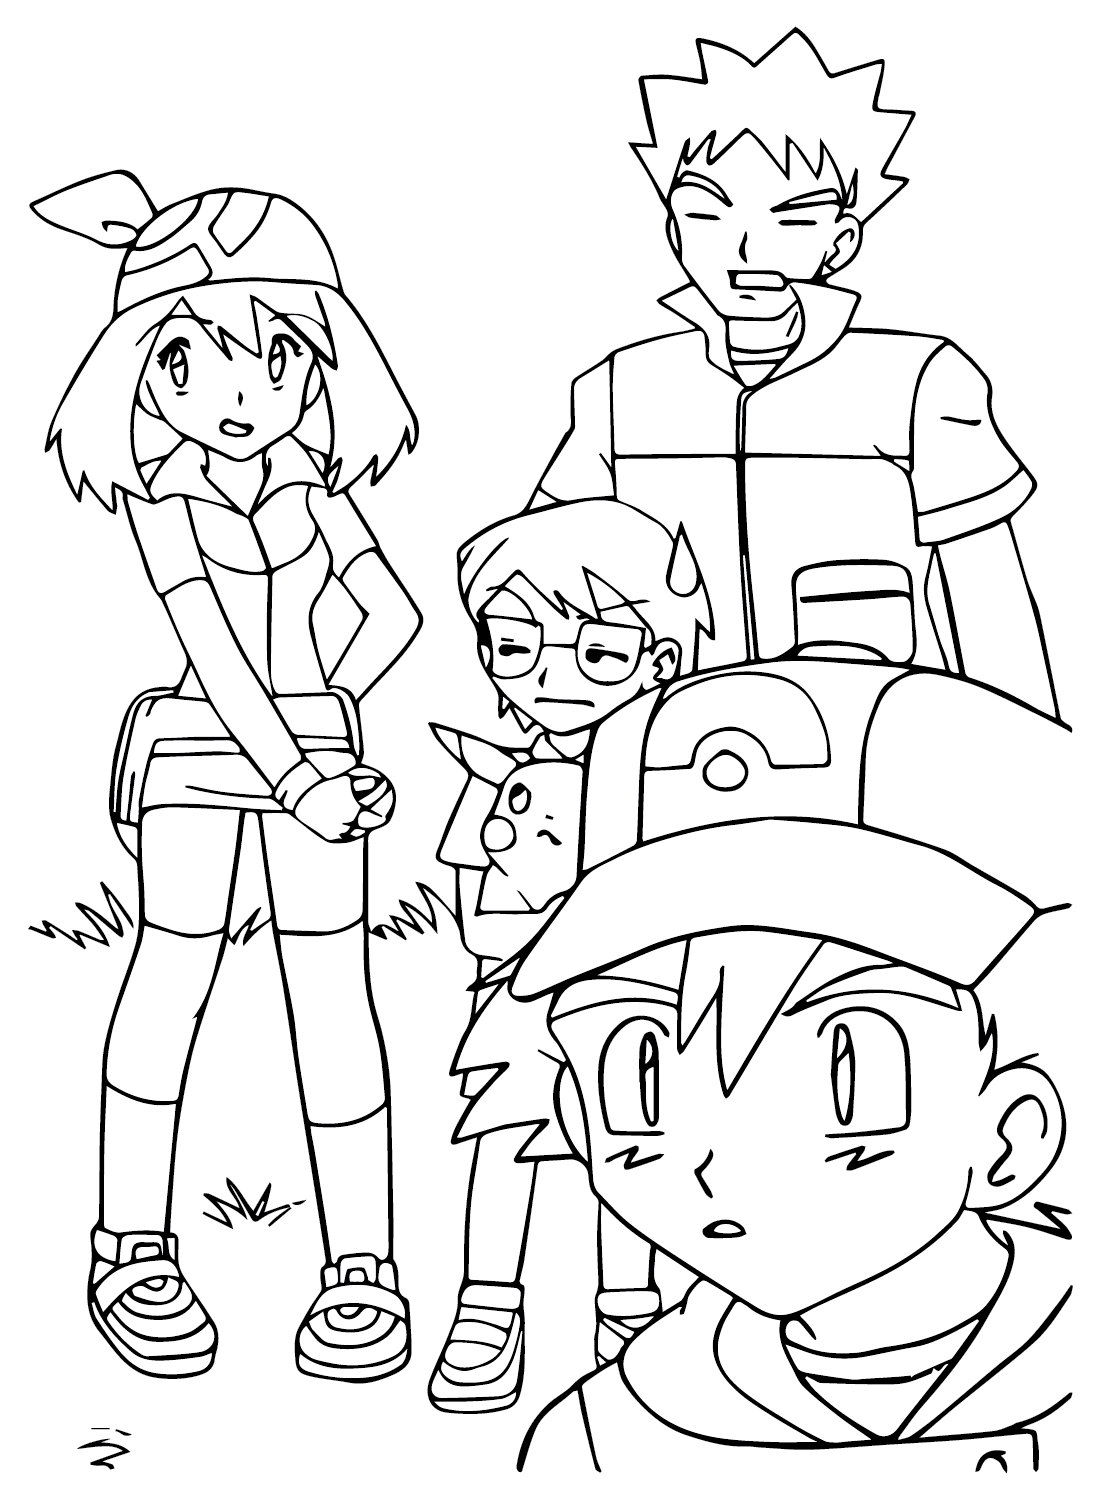 May, Ash, Brock and Max Coloring Page from May Pokemon